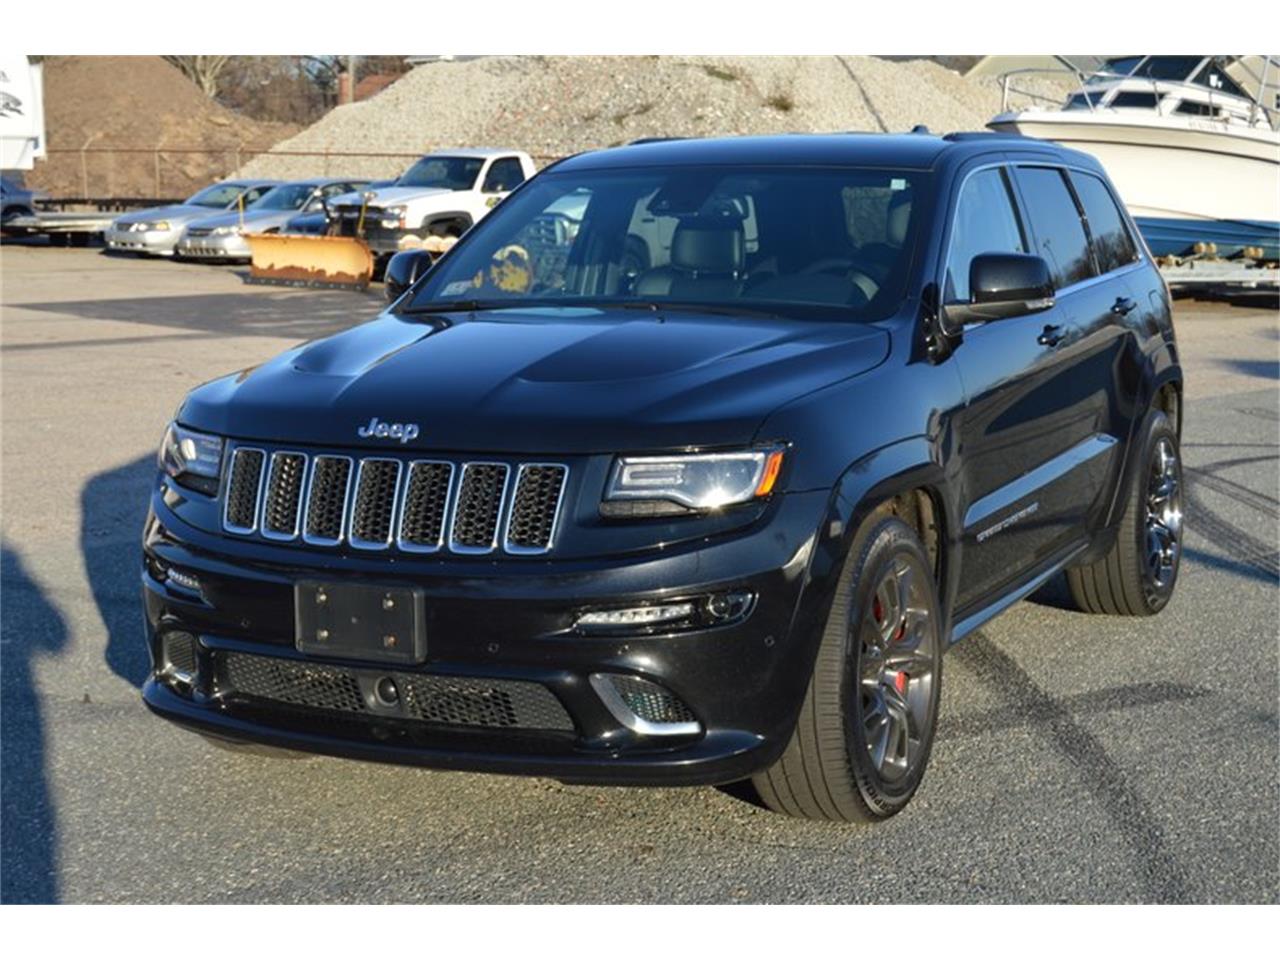 2014 Jeep Grand Cherokee for Sale | ClassicCars.com | CC-1171525